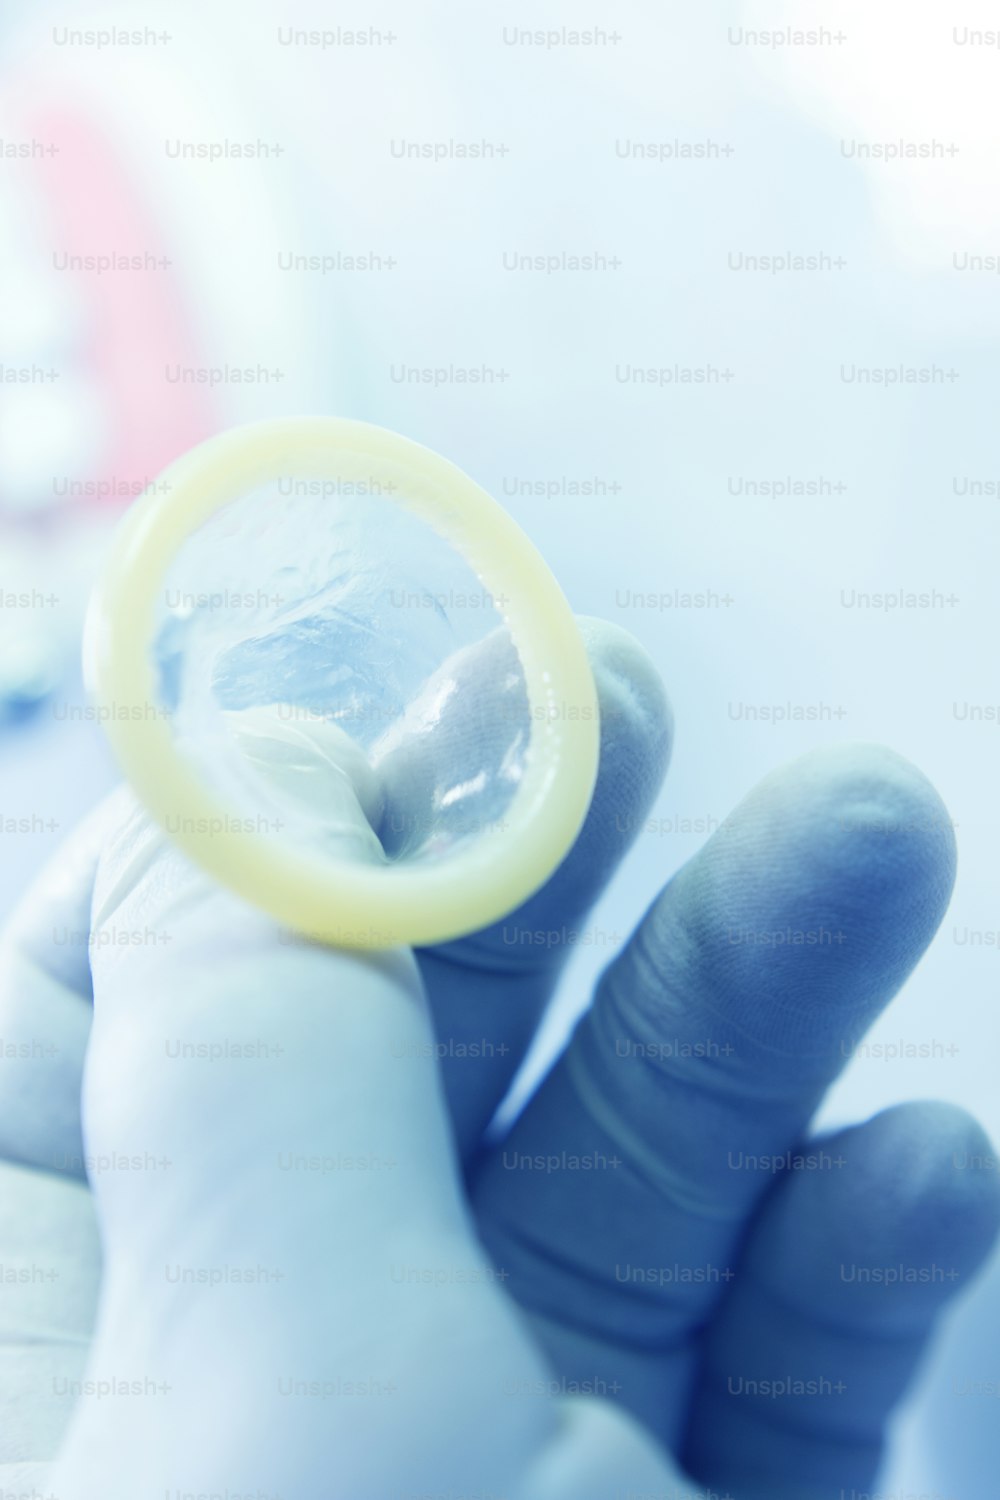 Rubber latex condom male contraceptive for safe disease and pregnancy free sex.